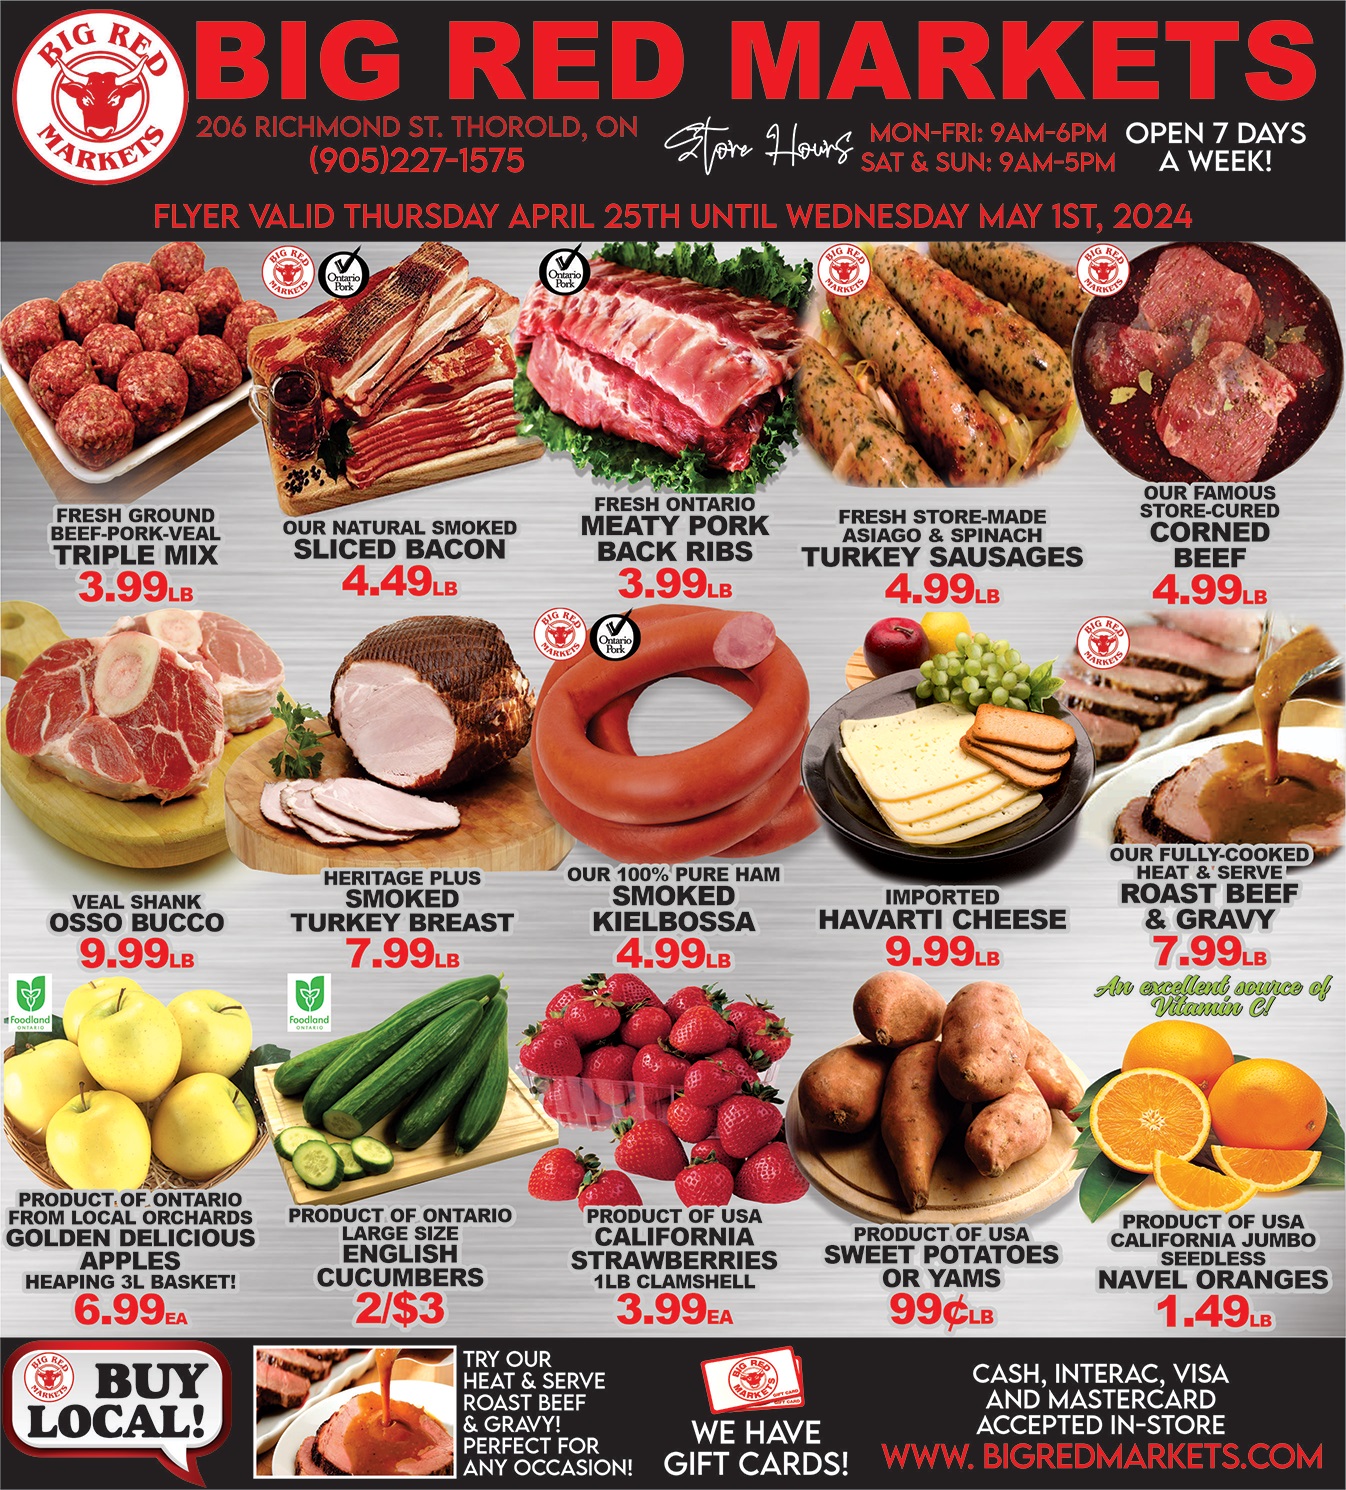 Big Red Markets - Weekly Flyer Specials